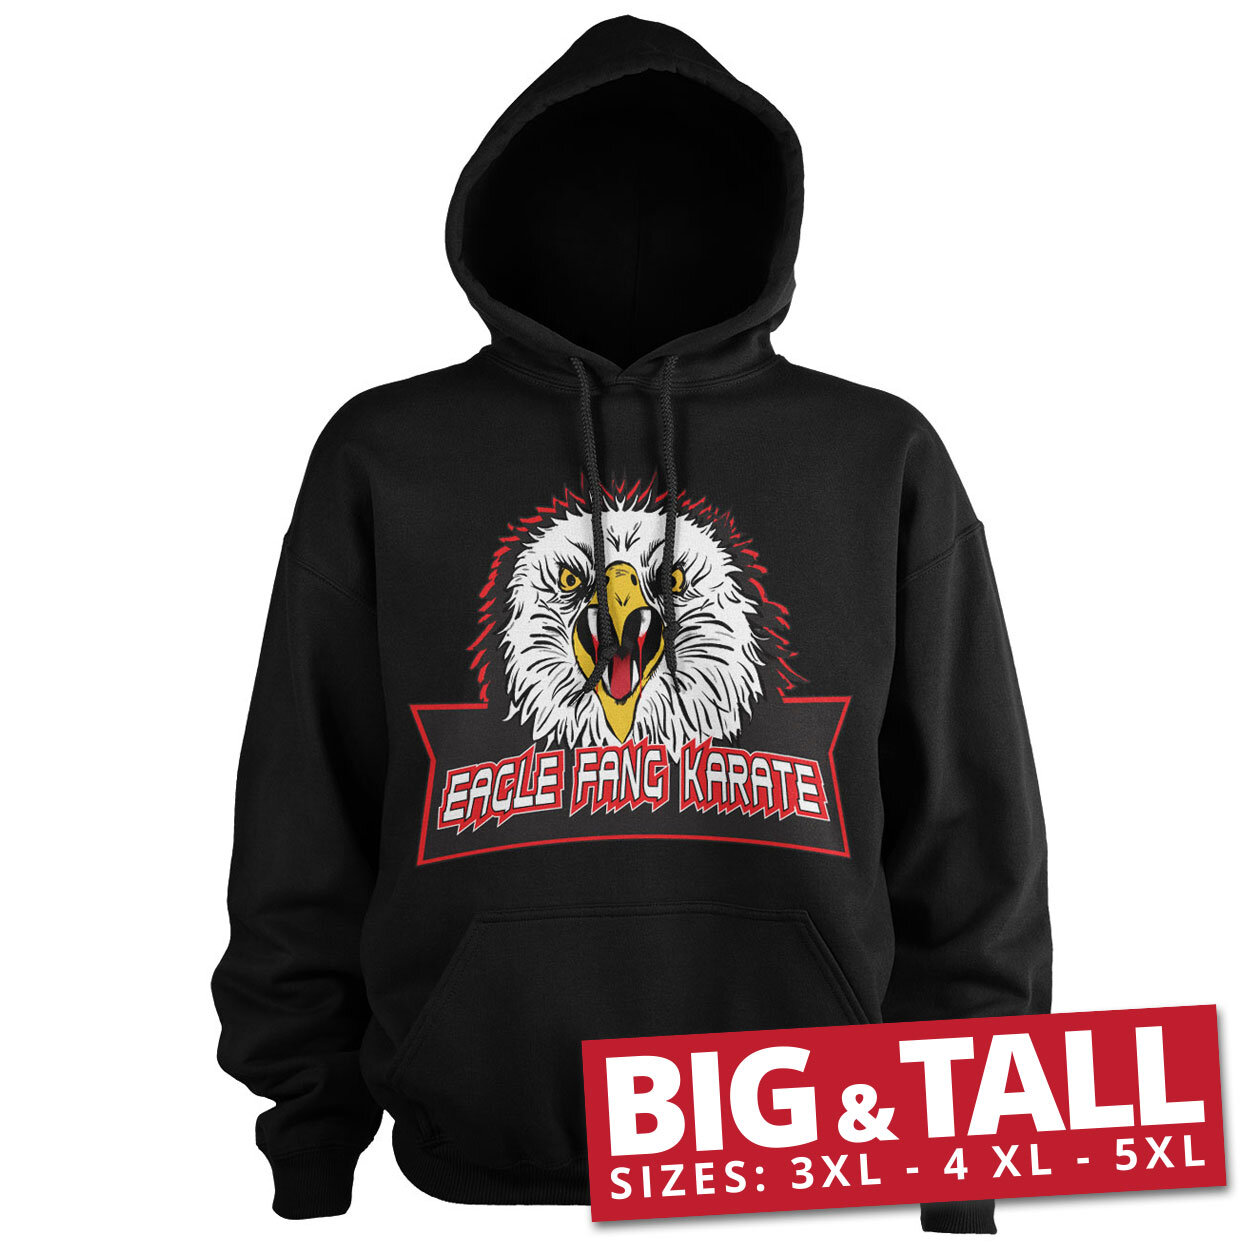 Eagle Fang Karate Big & Tall Hoodie